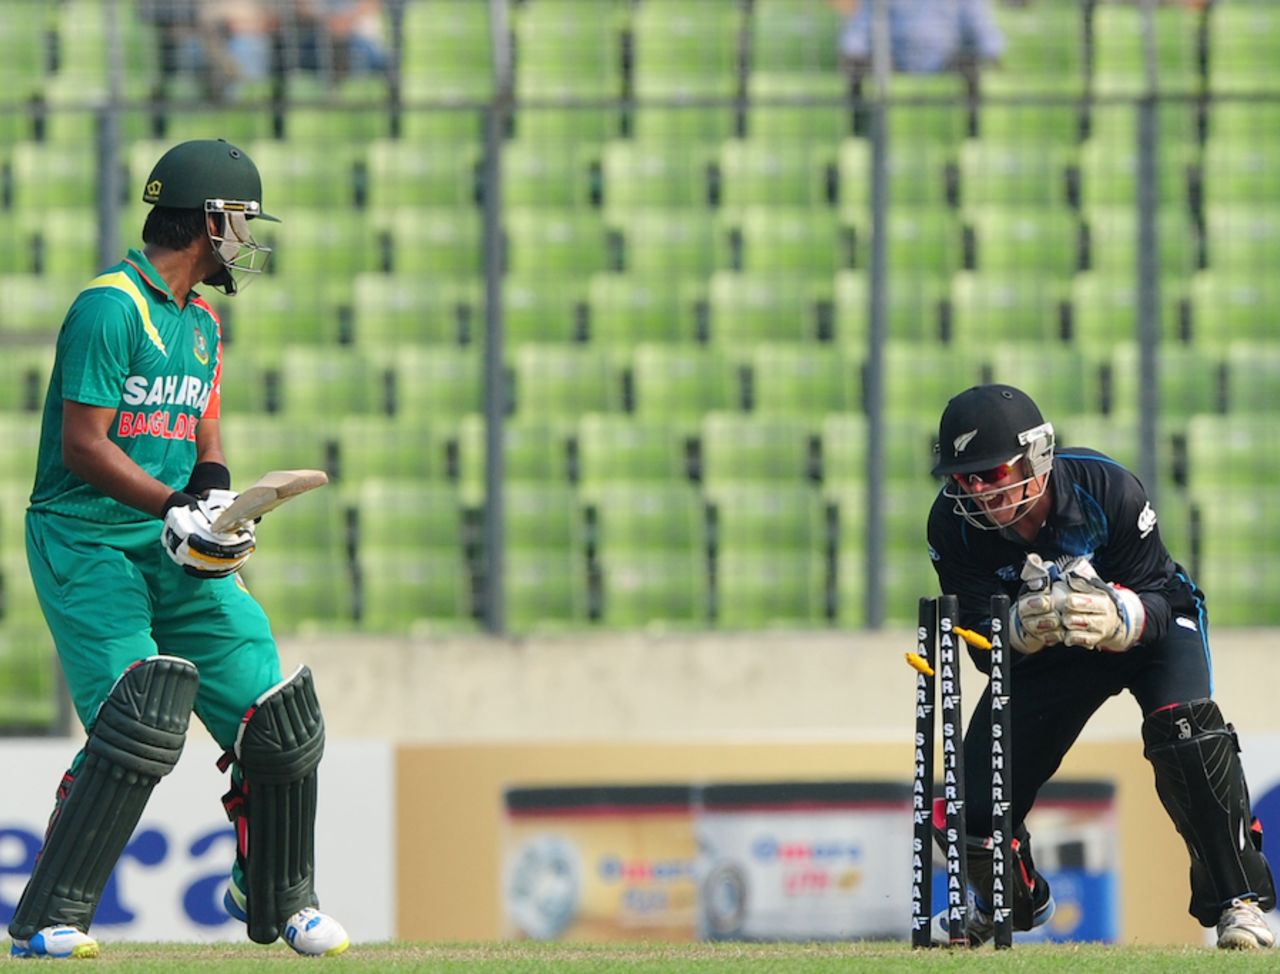 Tom Latham flicks the bails as Shamsur Rahman looks on, Bangladesh v New Zealand, 2nd ODI, Mirpur, October 31, 2013